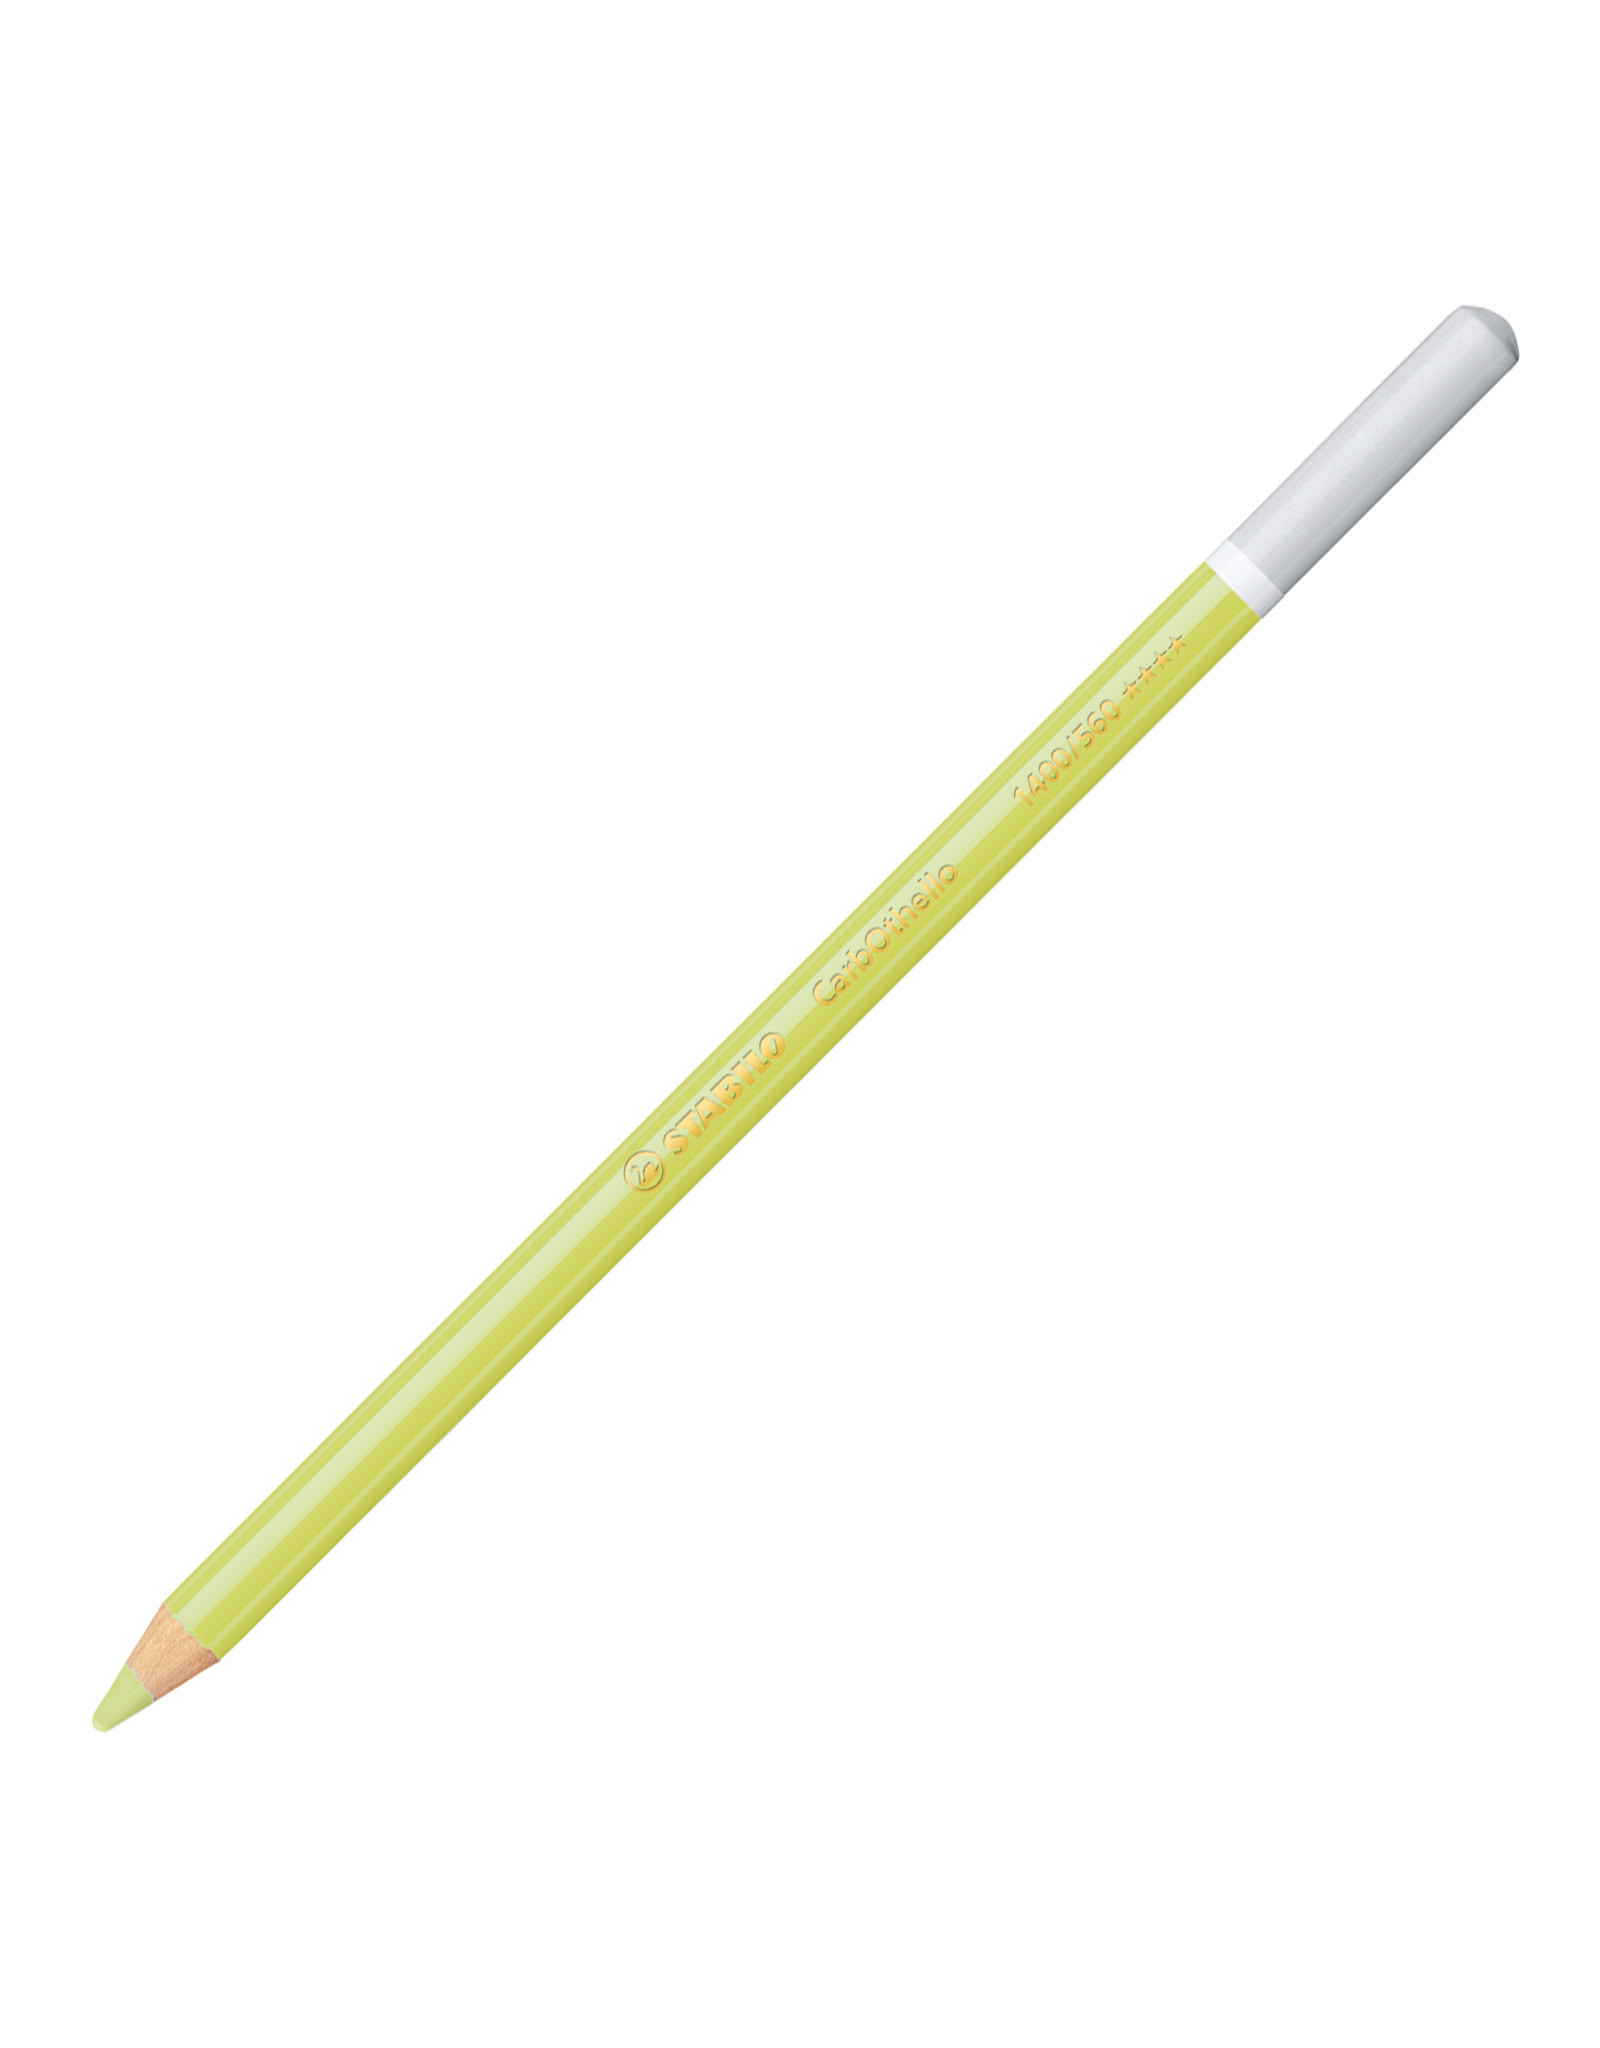 STABILO Stabilo Carbothello Pastel Pencil, Leaf Green Pale